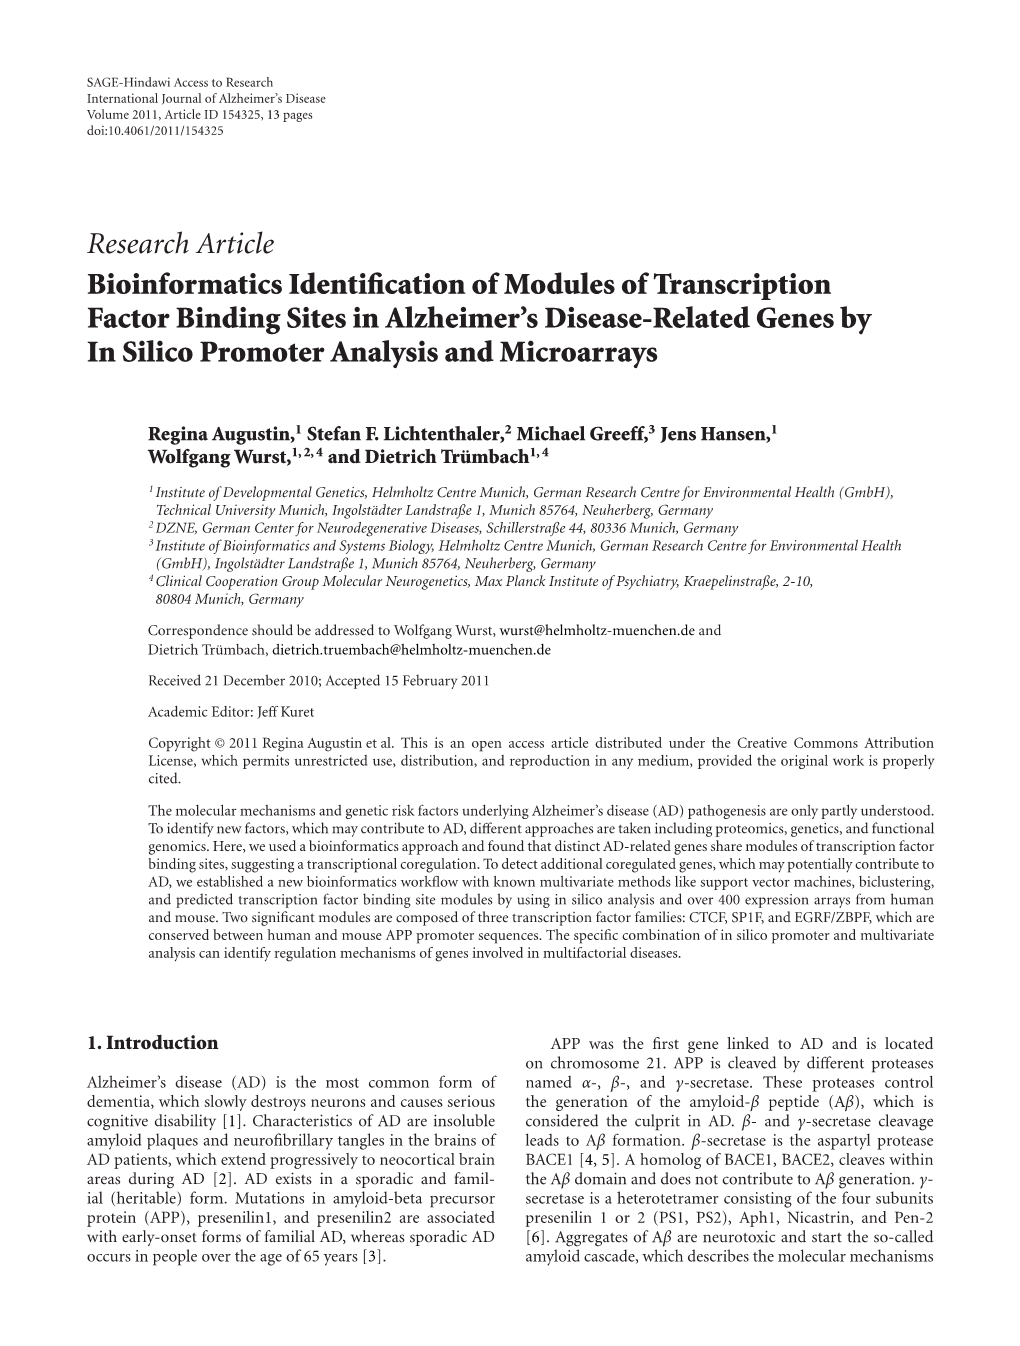 Bioinformatics Identification of Modules of Transcription Factor